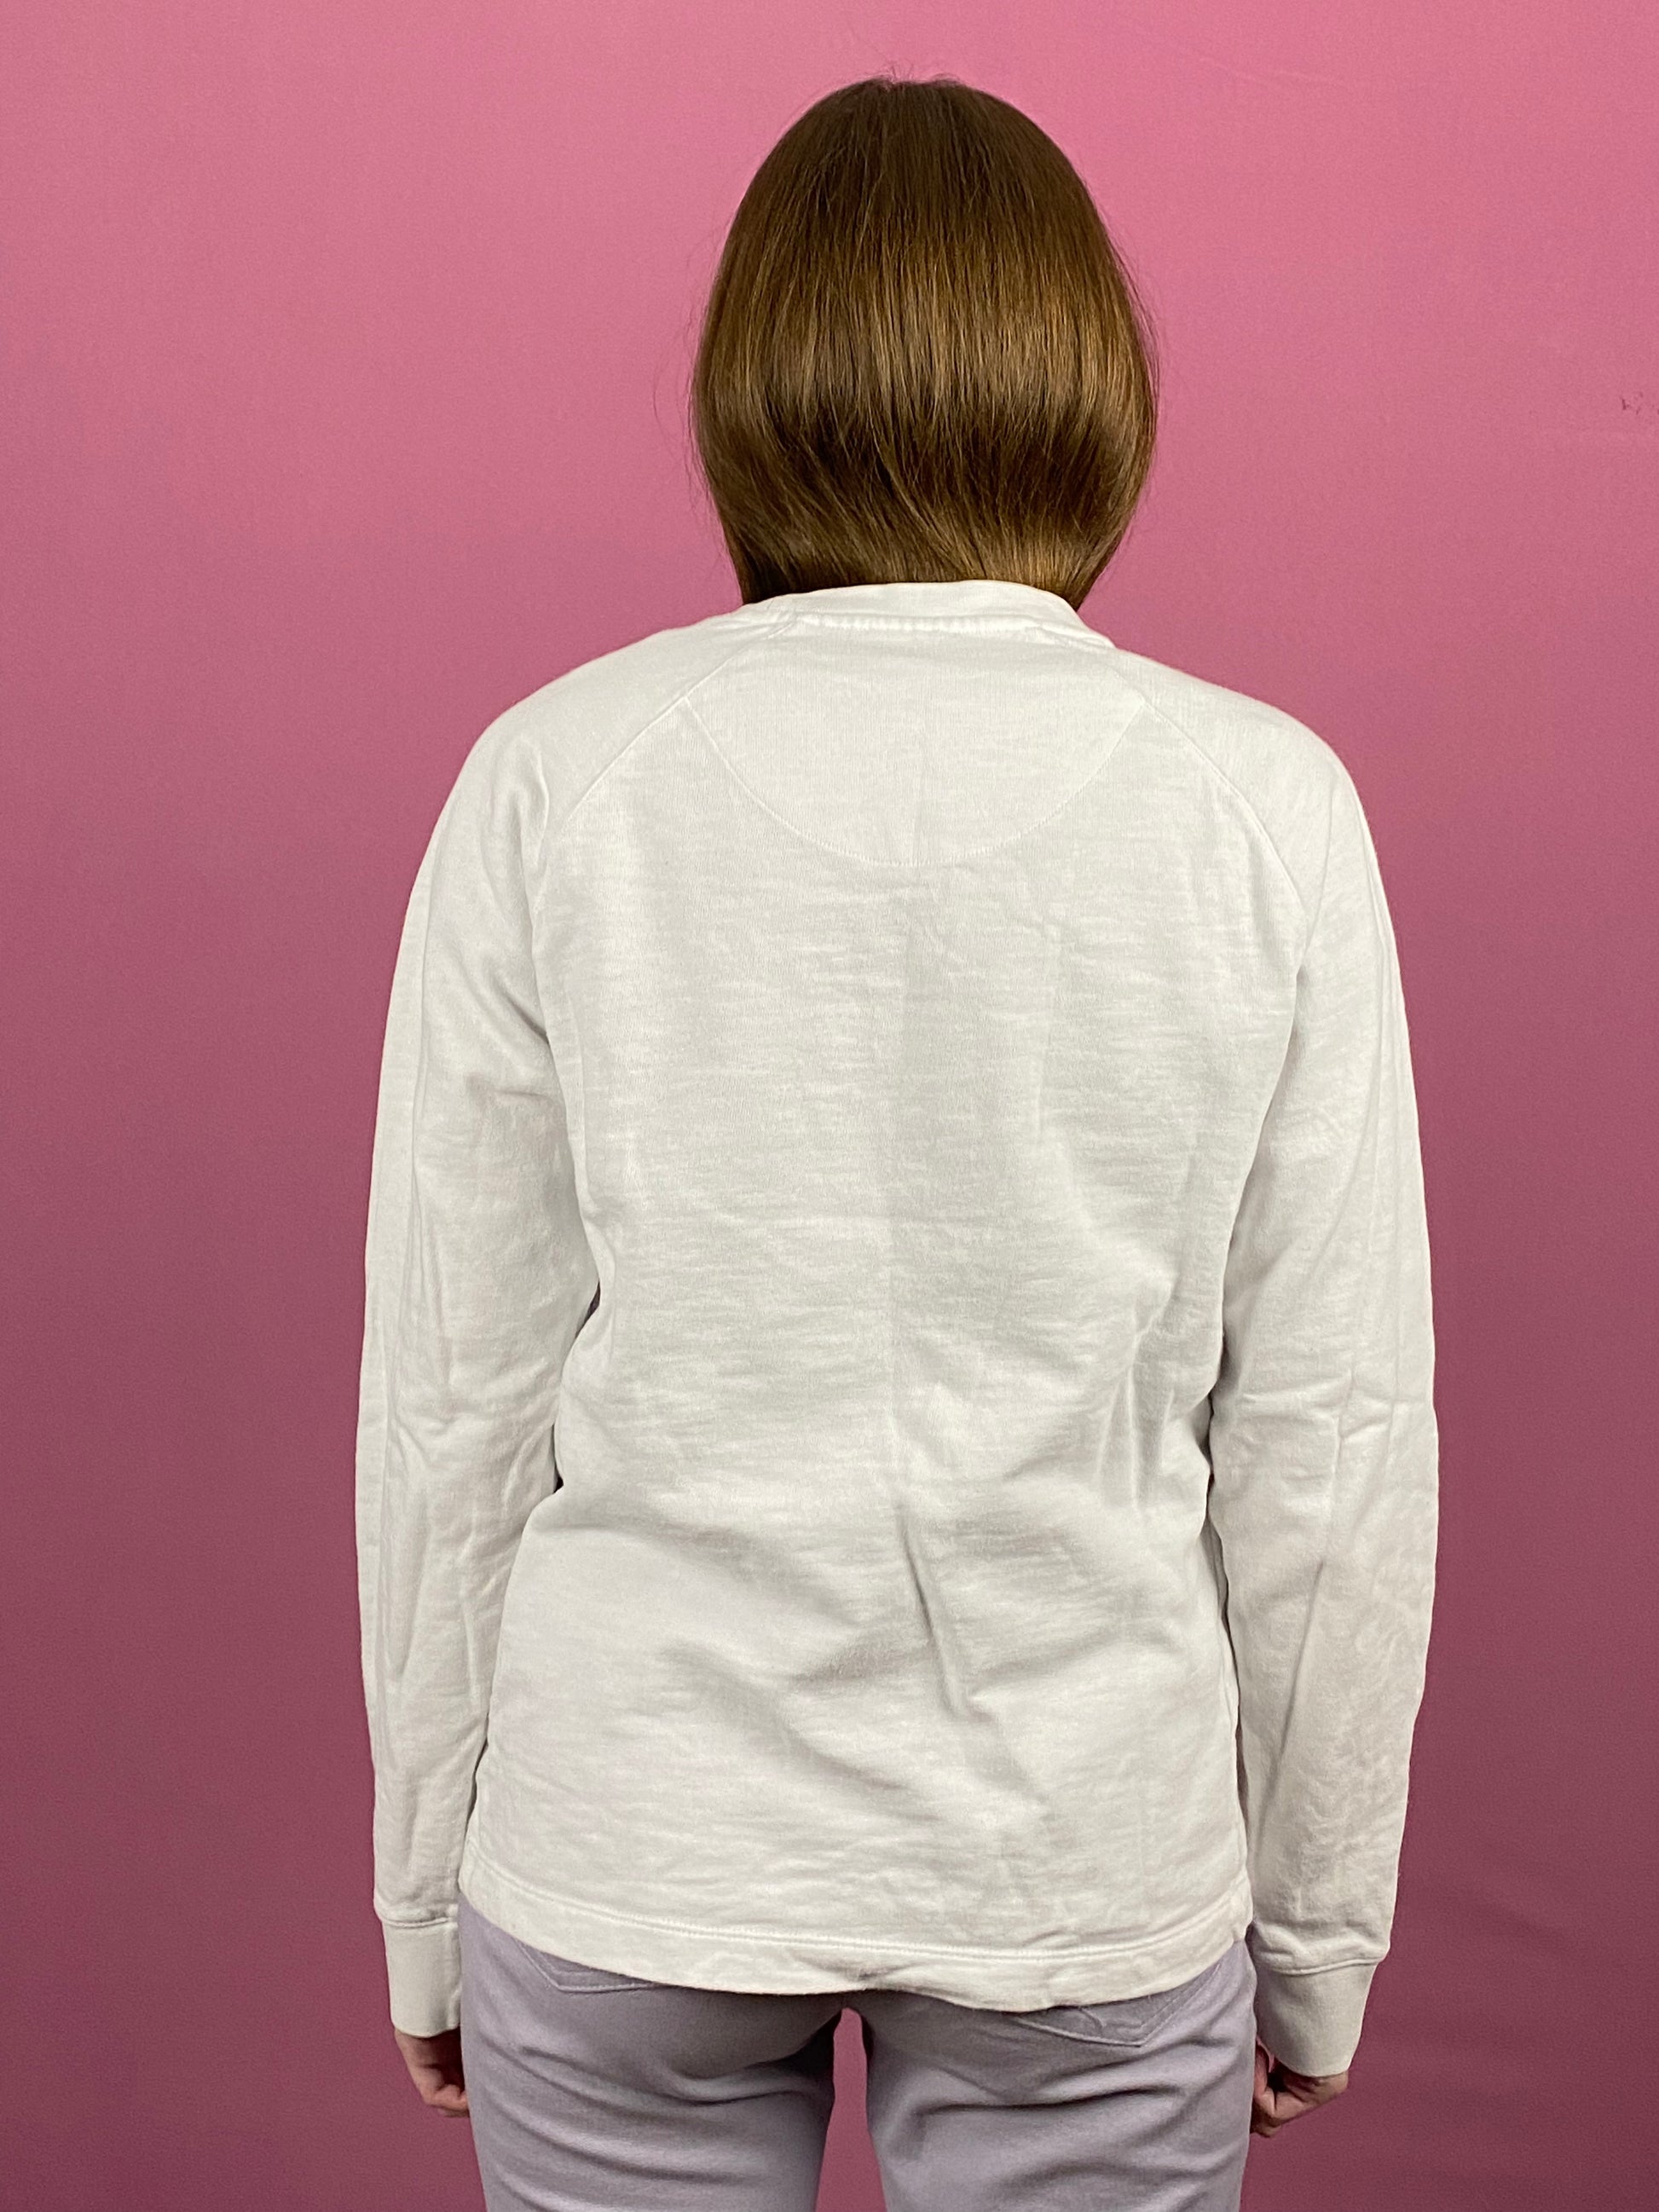 Armani Exchange Vintage Women's Sweatshirt - Small White Cotton